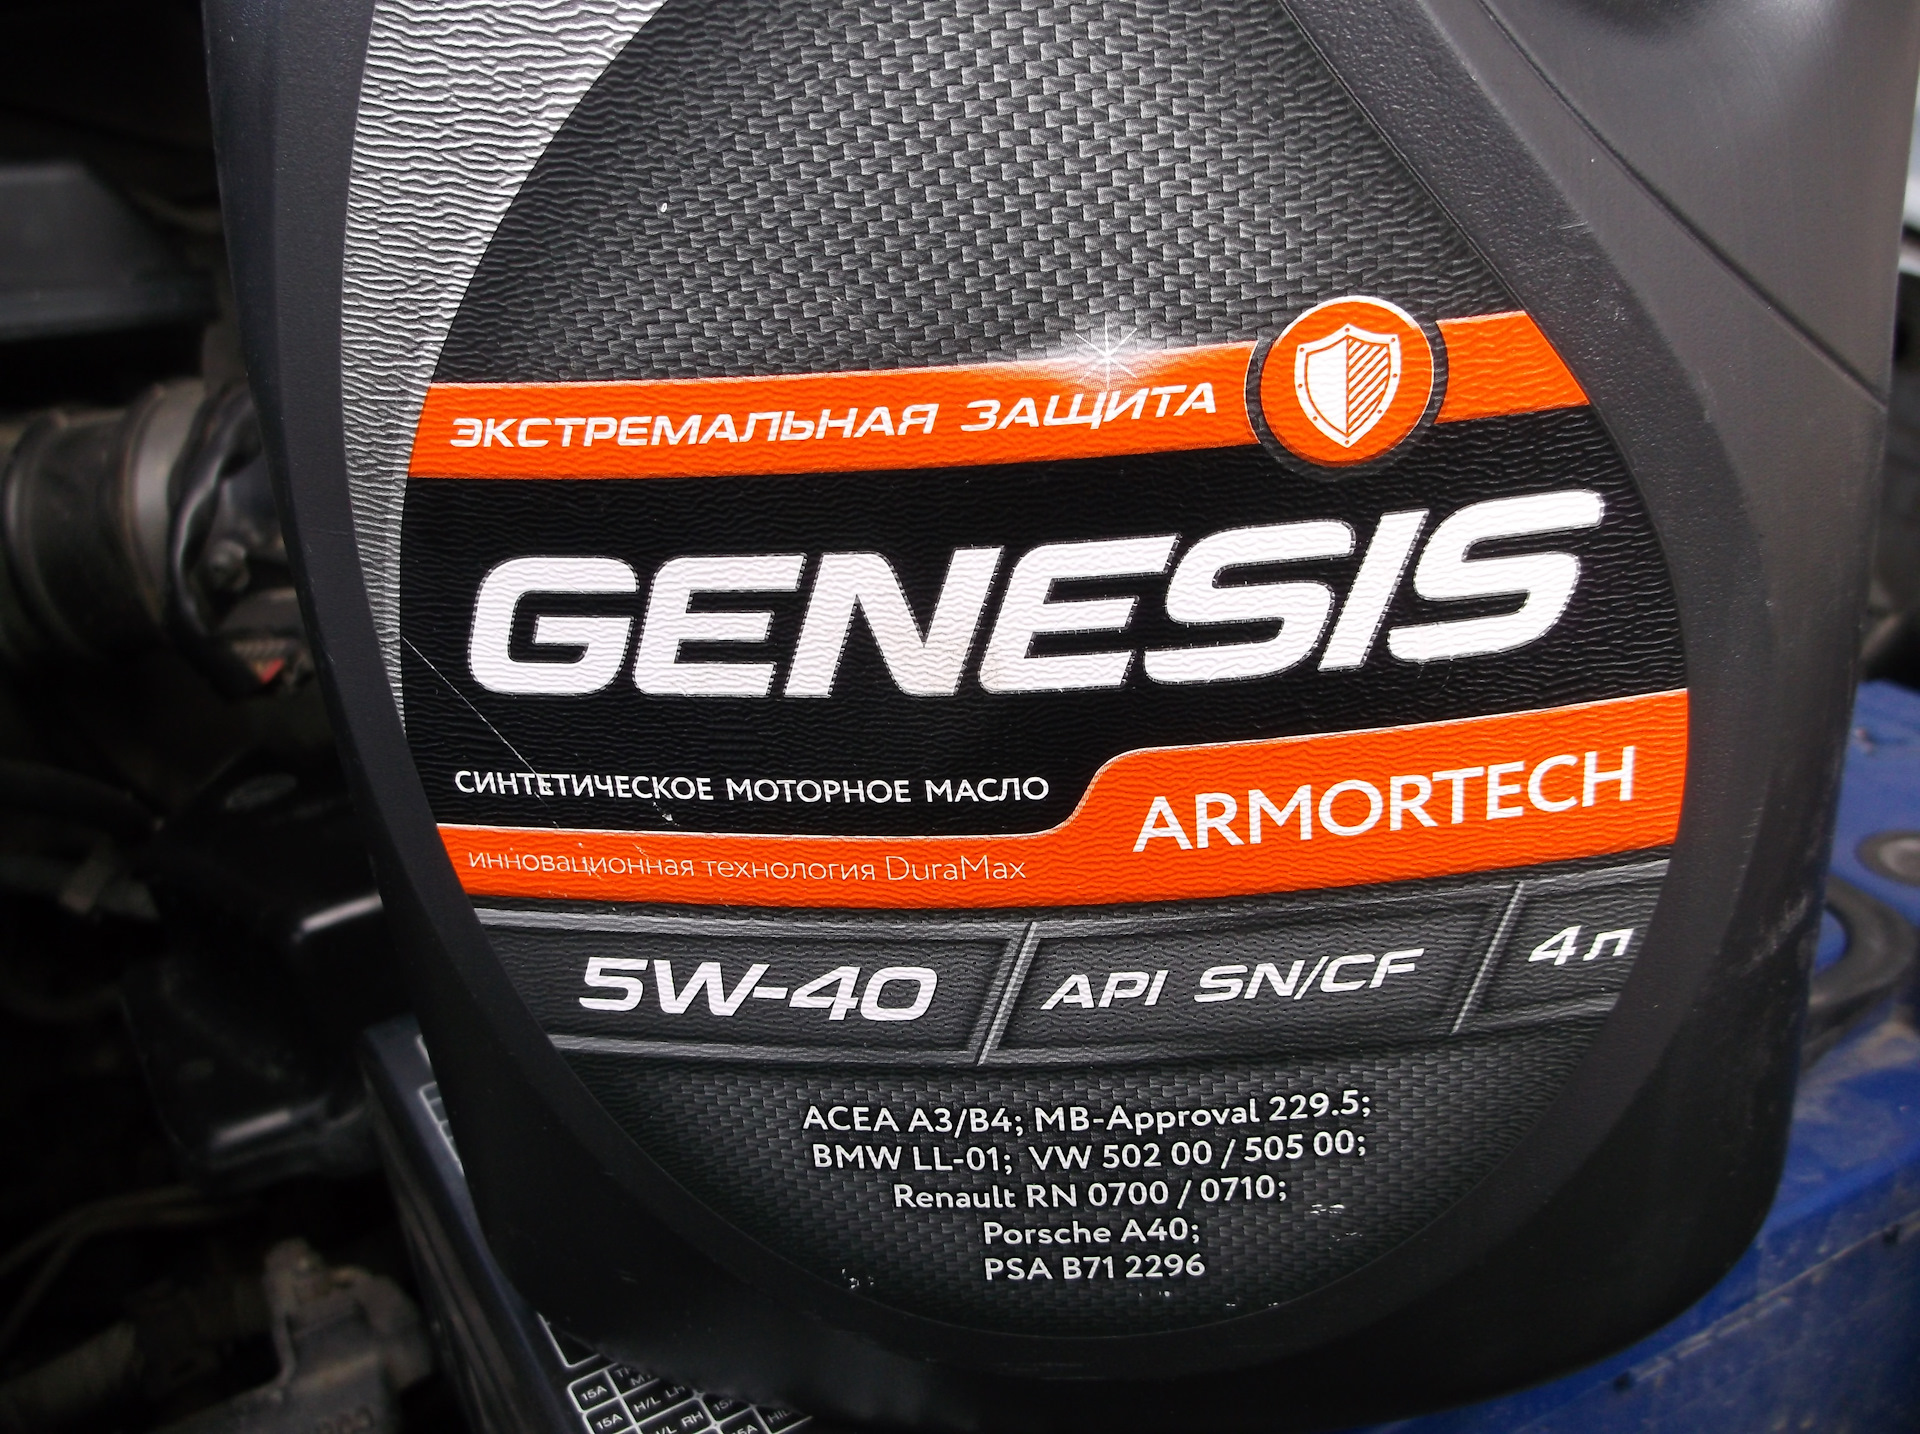 Armortech 5w40 отзывы. Genesis Armortech 5w-40. Genesis Armortech 5w-40 экстремальная защита. Genesis Armortech 5w40 фасовки. Лукойл Genesis Armortech 5w-40.